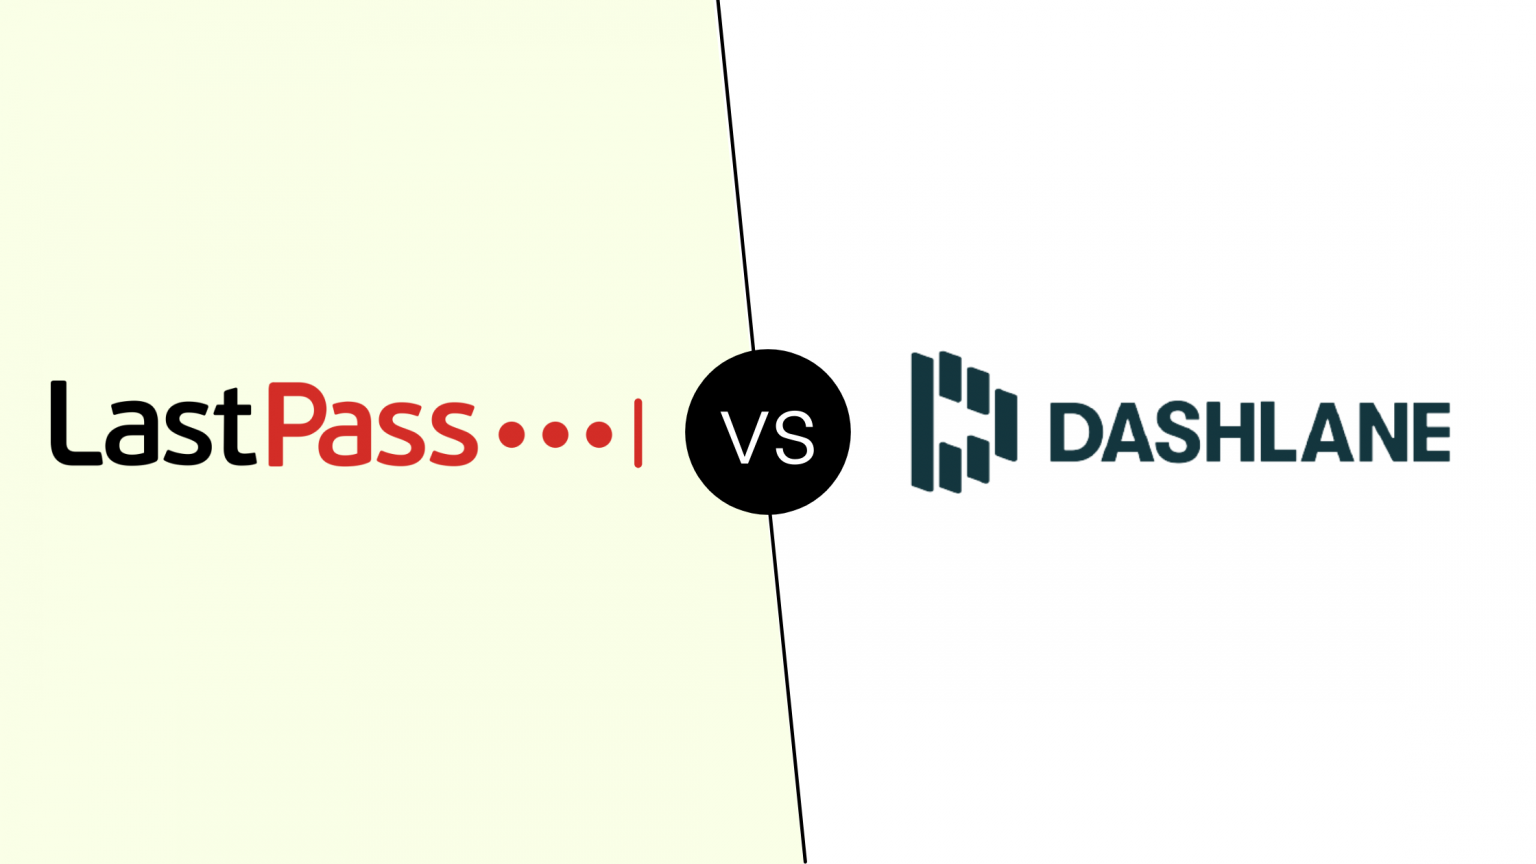 keeper password manager vs lastpass